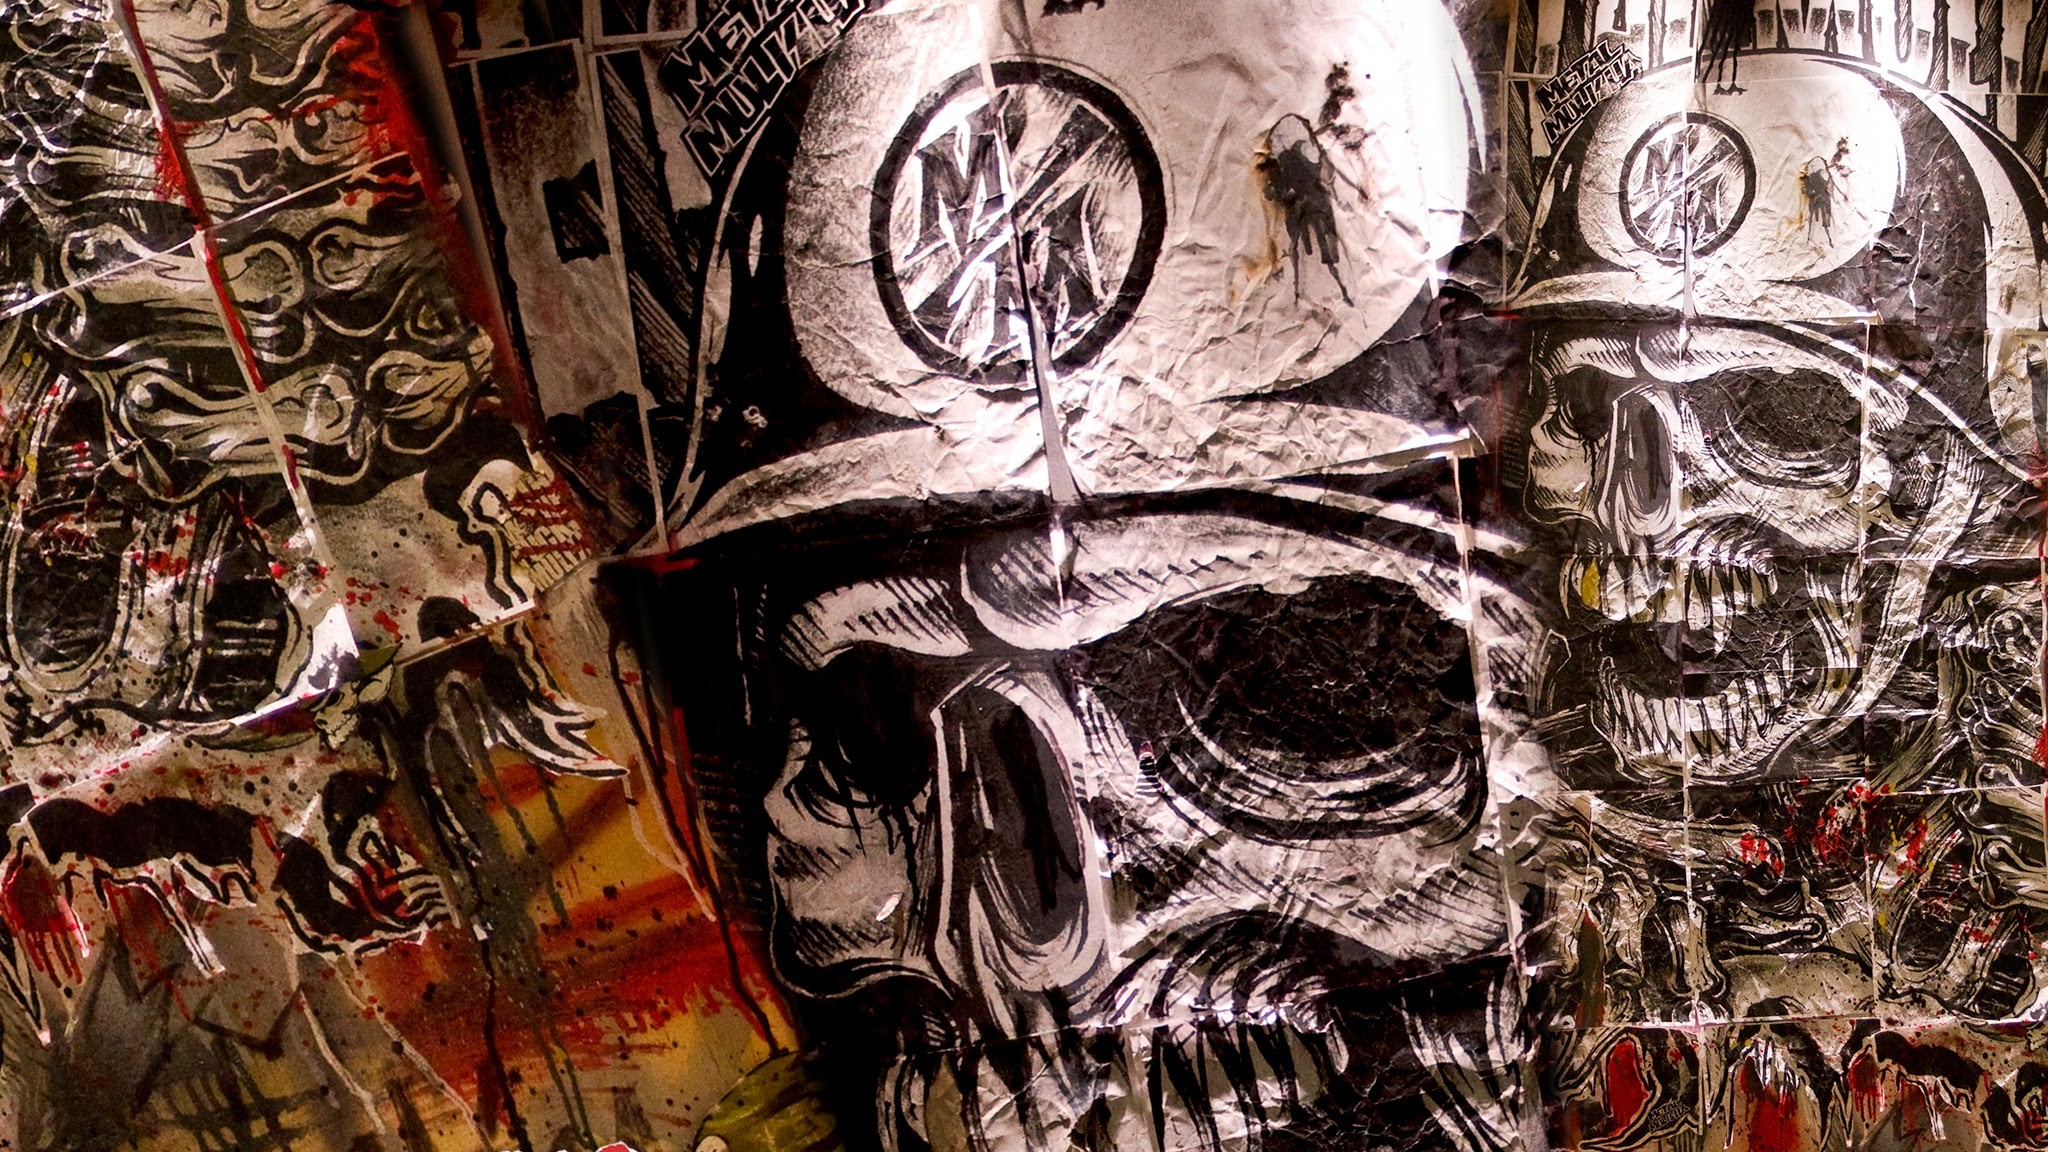 metal mulisha wallpaper,art,illustration,skull,drawing,graphic design